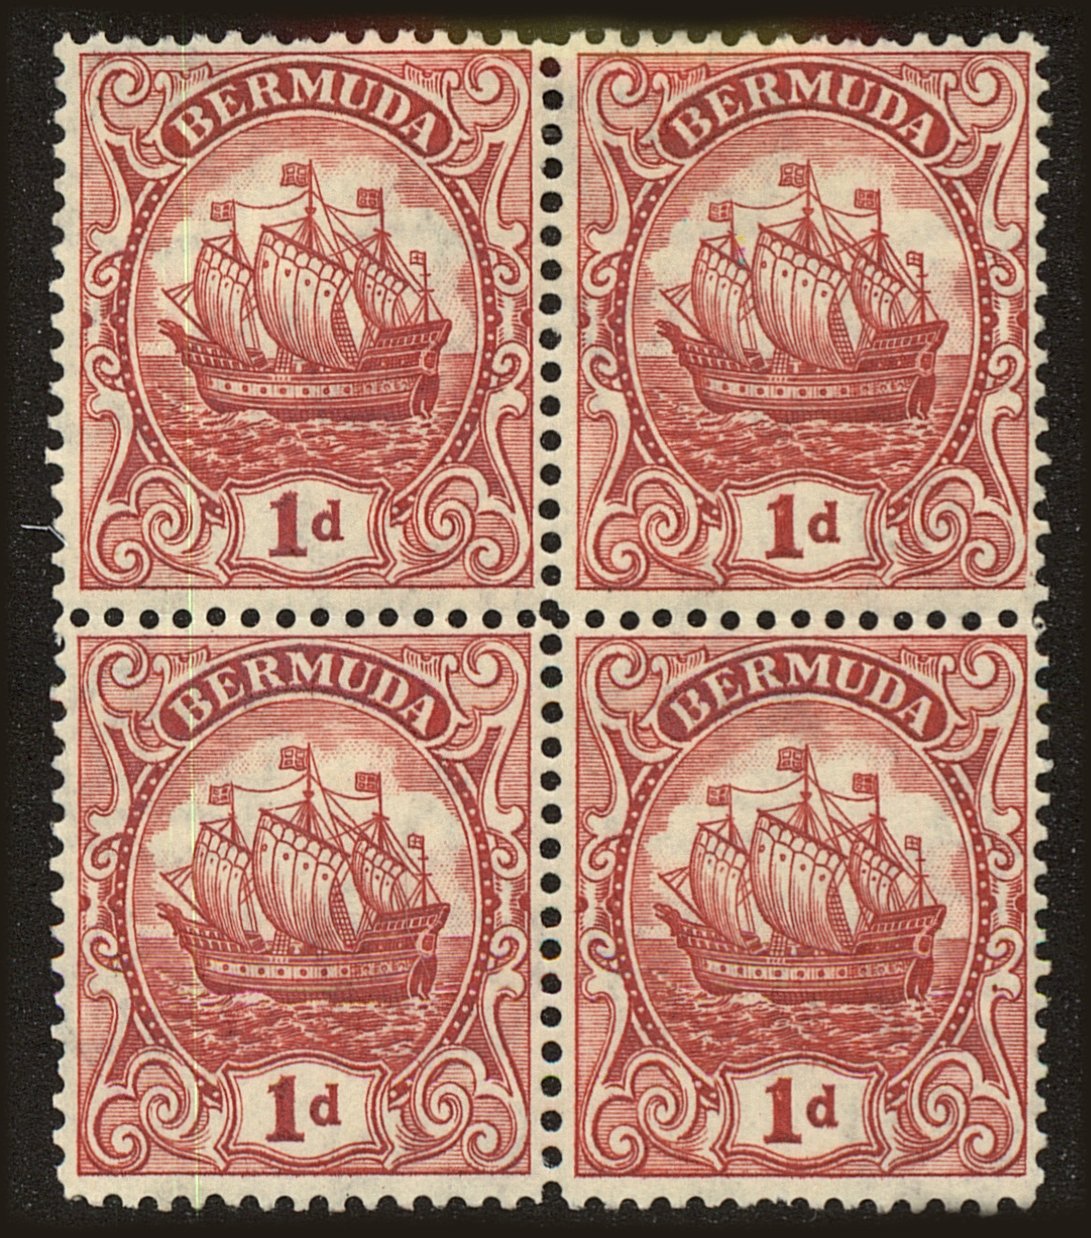 Front view of Bermuda 83 collectors stamp